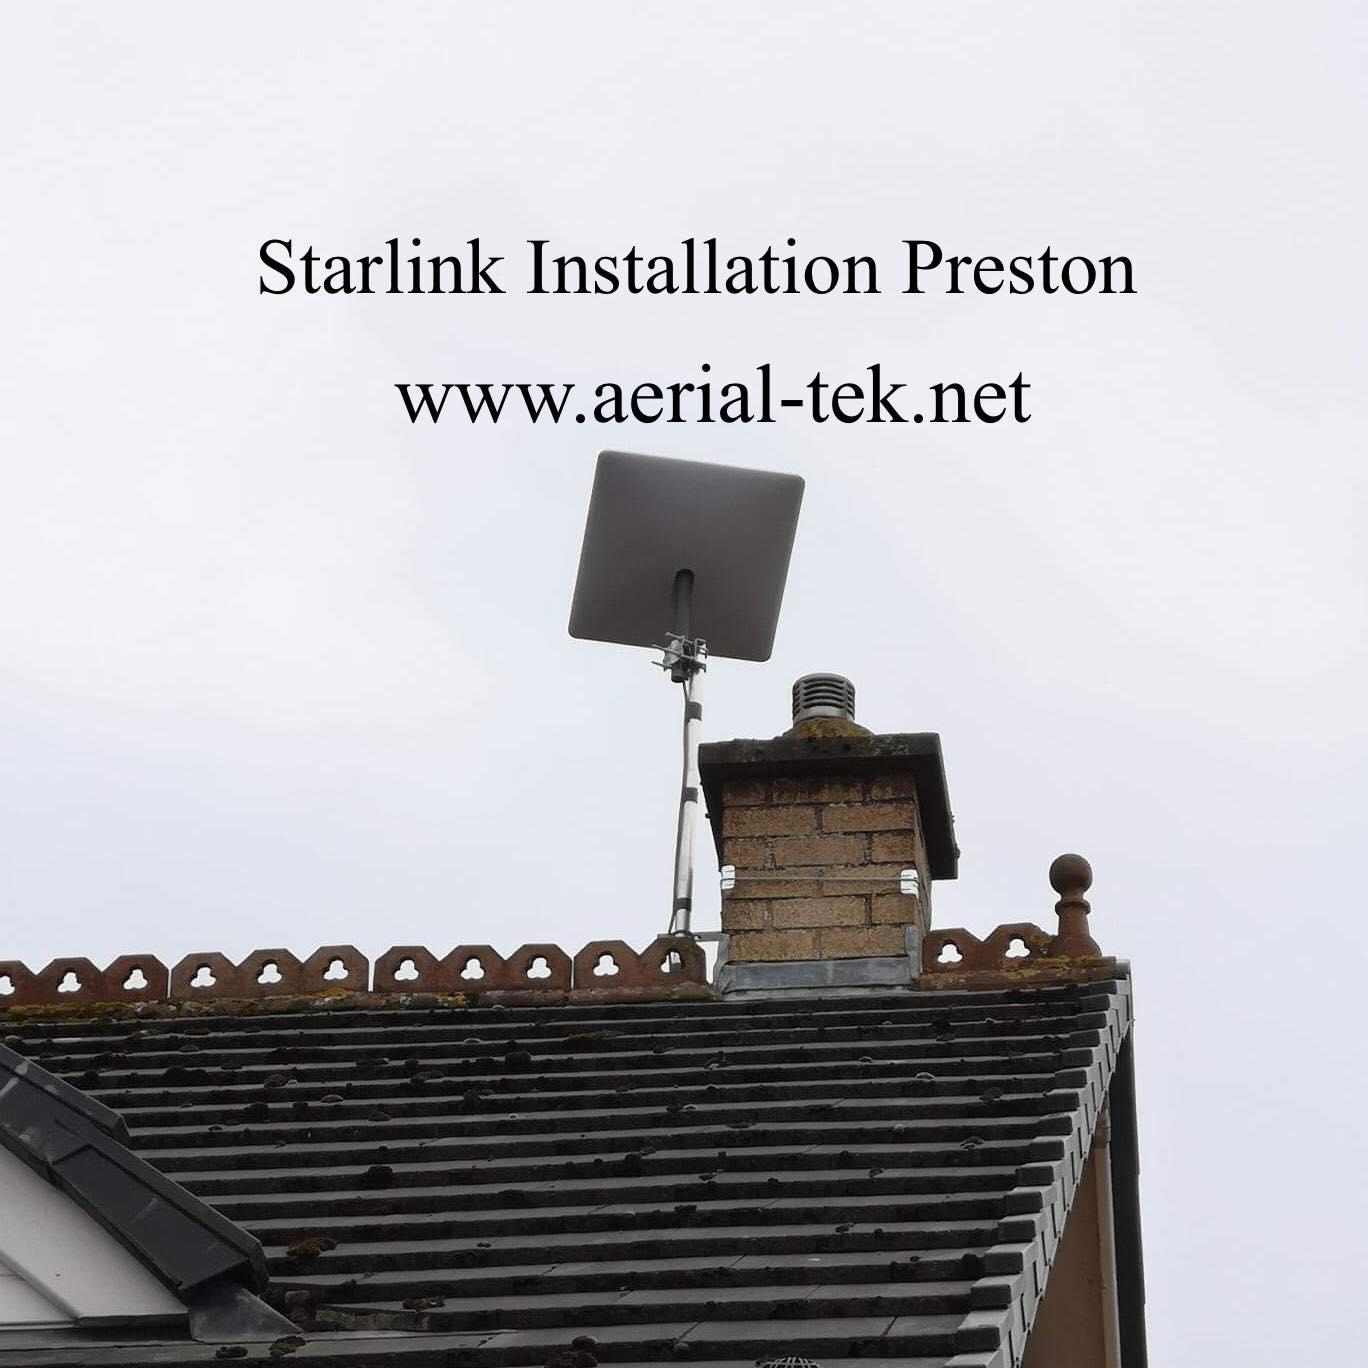 Starlink Installation Preston